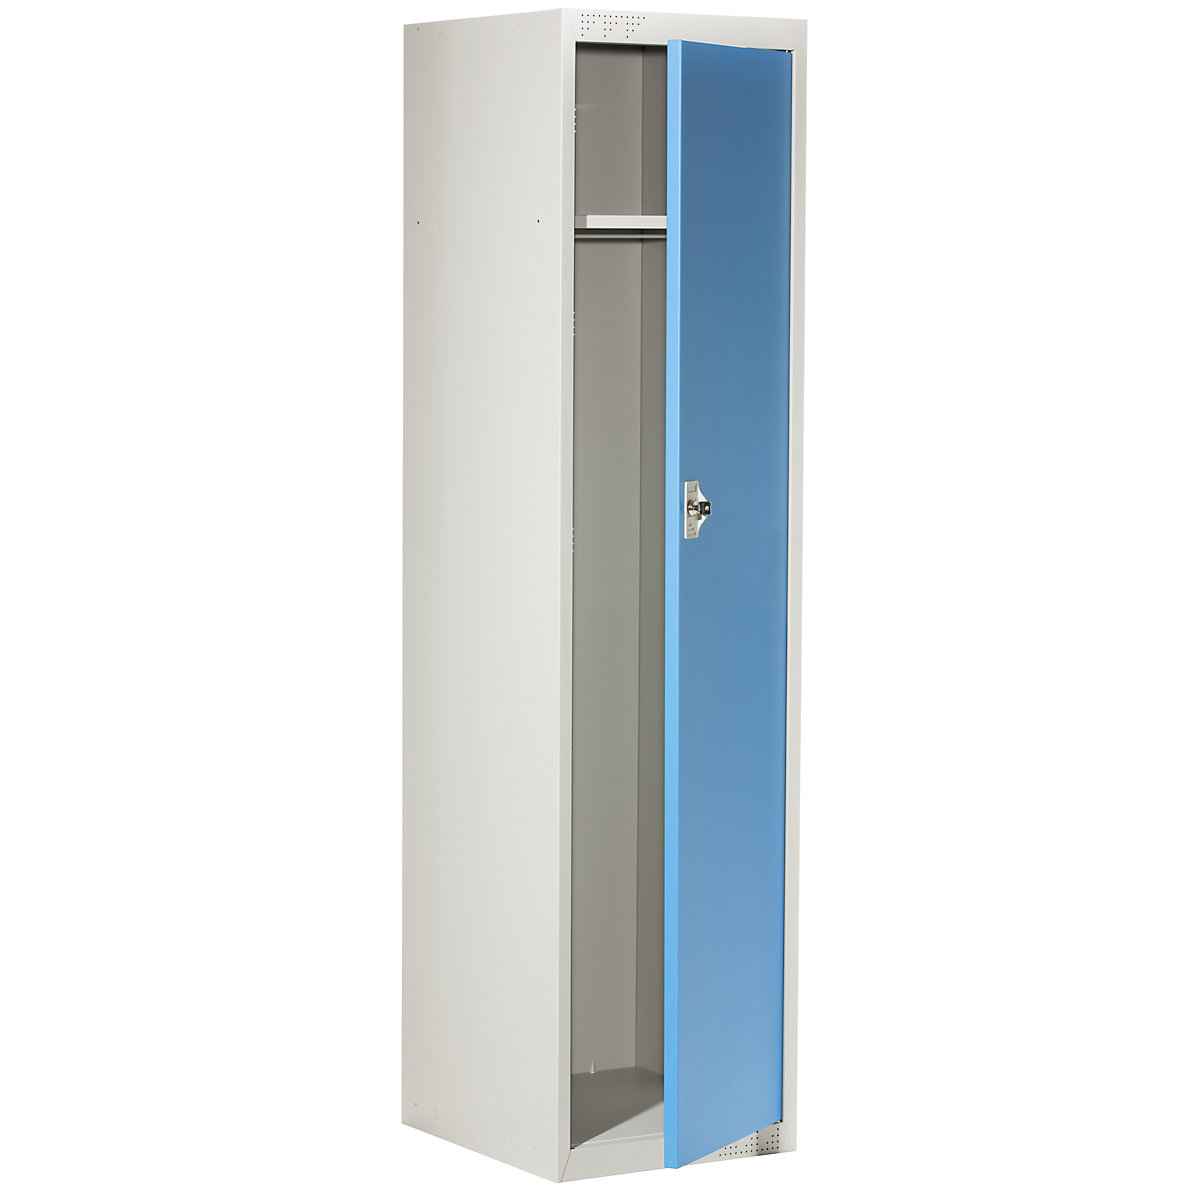 Cloakroom locker system – eurokraft basic, with standard and extension modules, HxWxD 1800 x 450 x 500 mm, 1 hat shelf, 1 clothes rail, light grey / light blue, standard unit-3